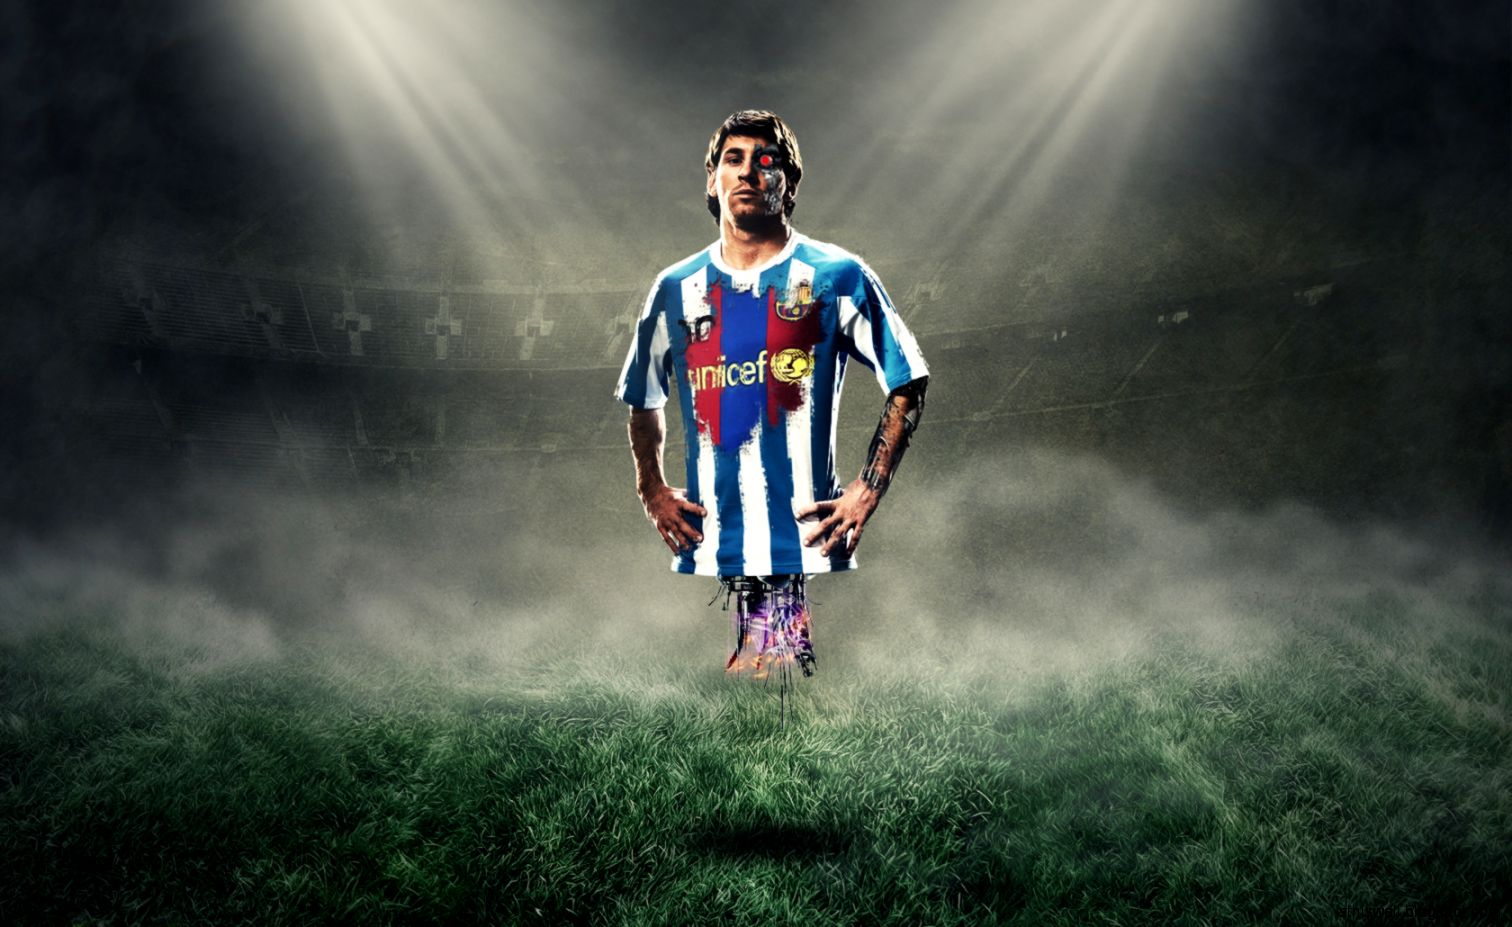 Download Free Cool Soccer Wallpapers Pixelstalk
cool - Lionel Messi Wallpaper 2011 - HD Wallpaper 